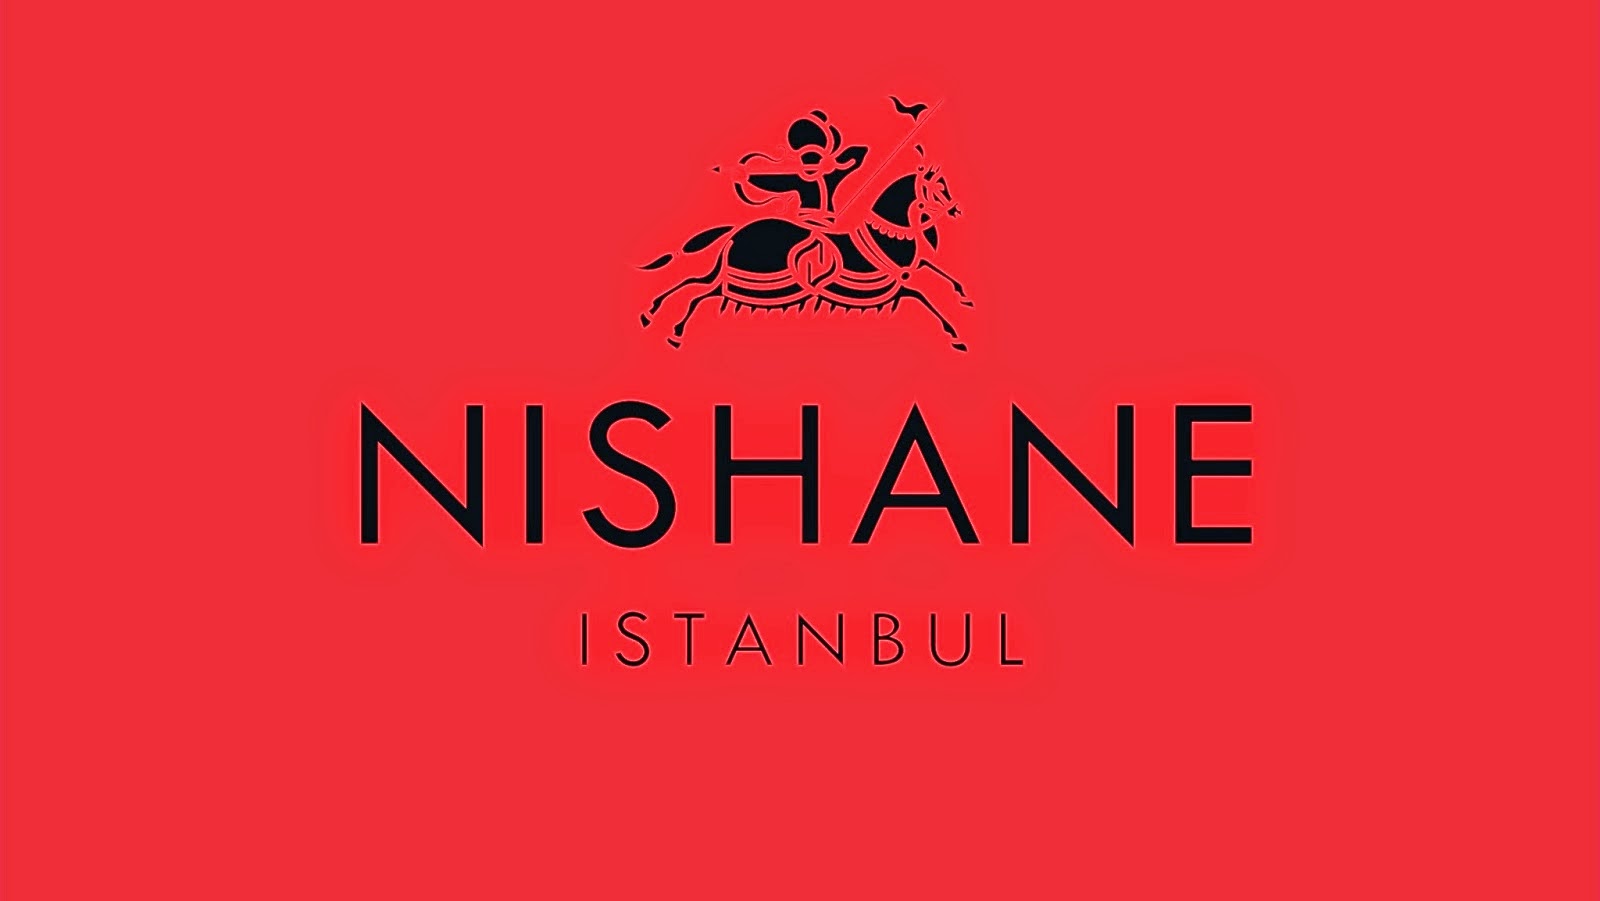 nishane_logo Istanbul istanbul İStanbul yazılı.jpg